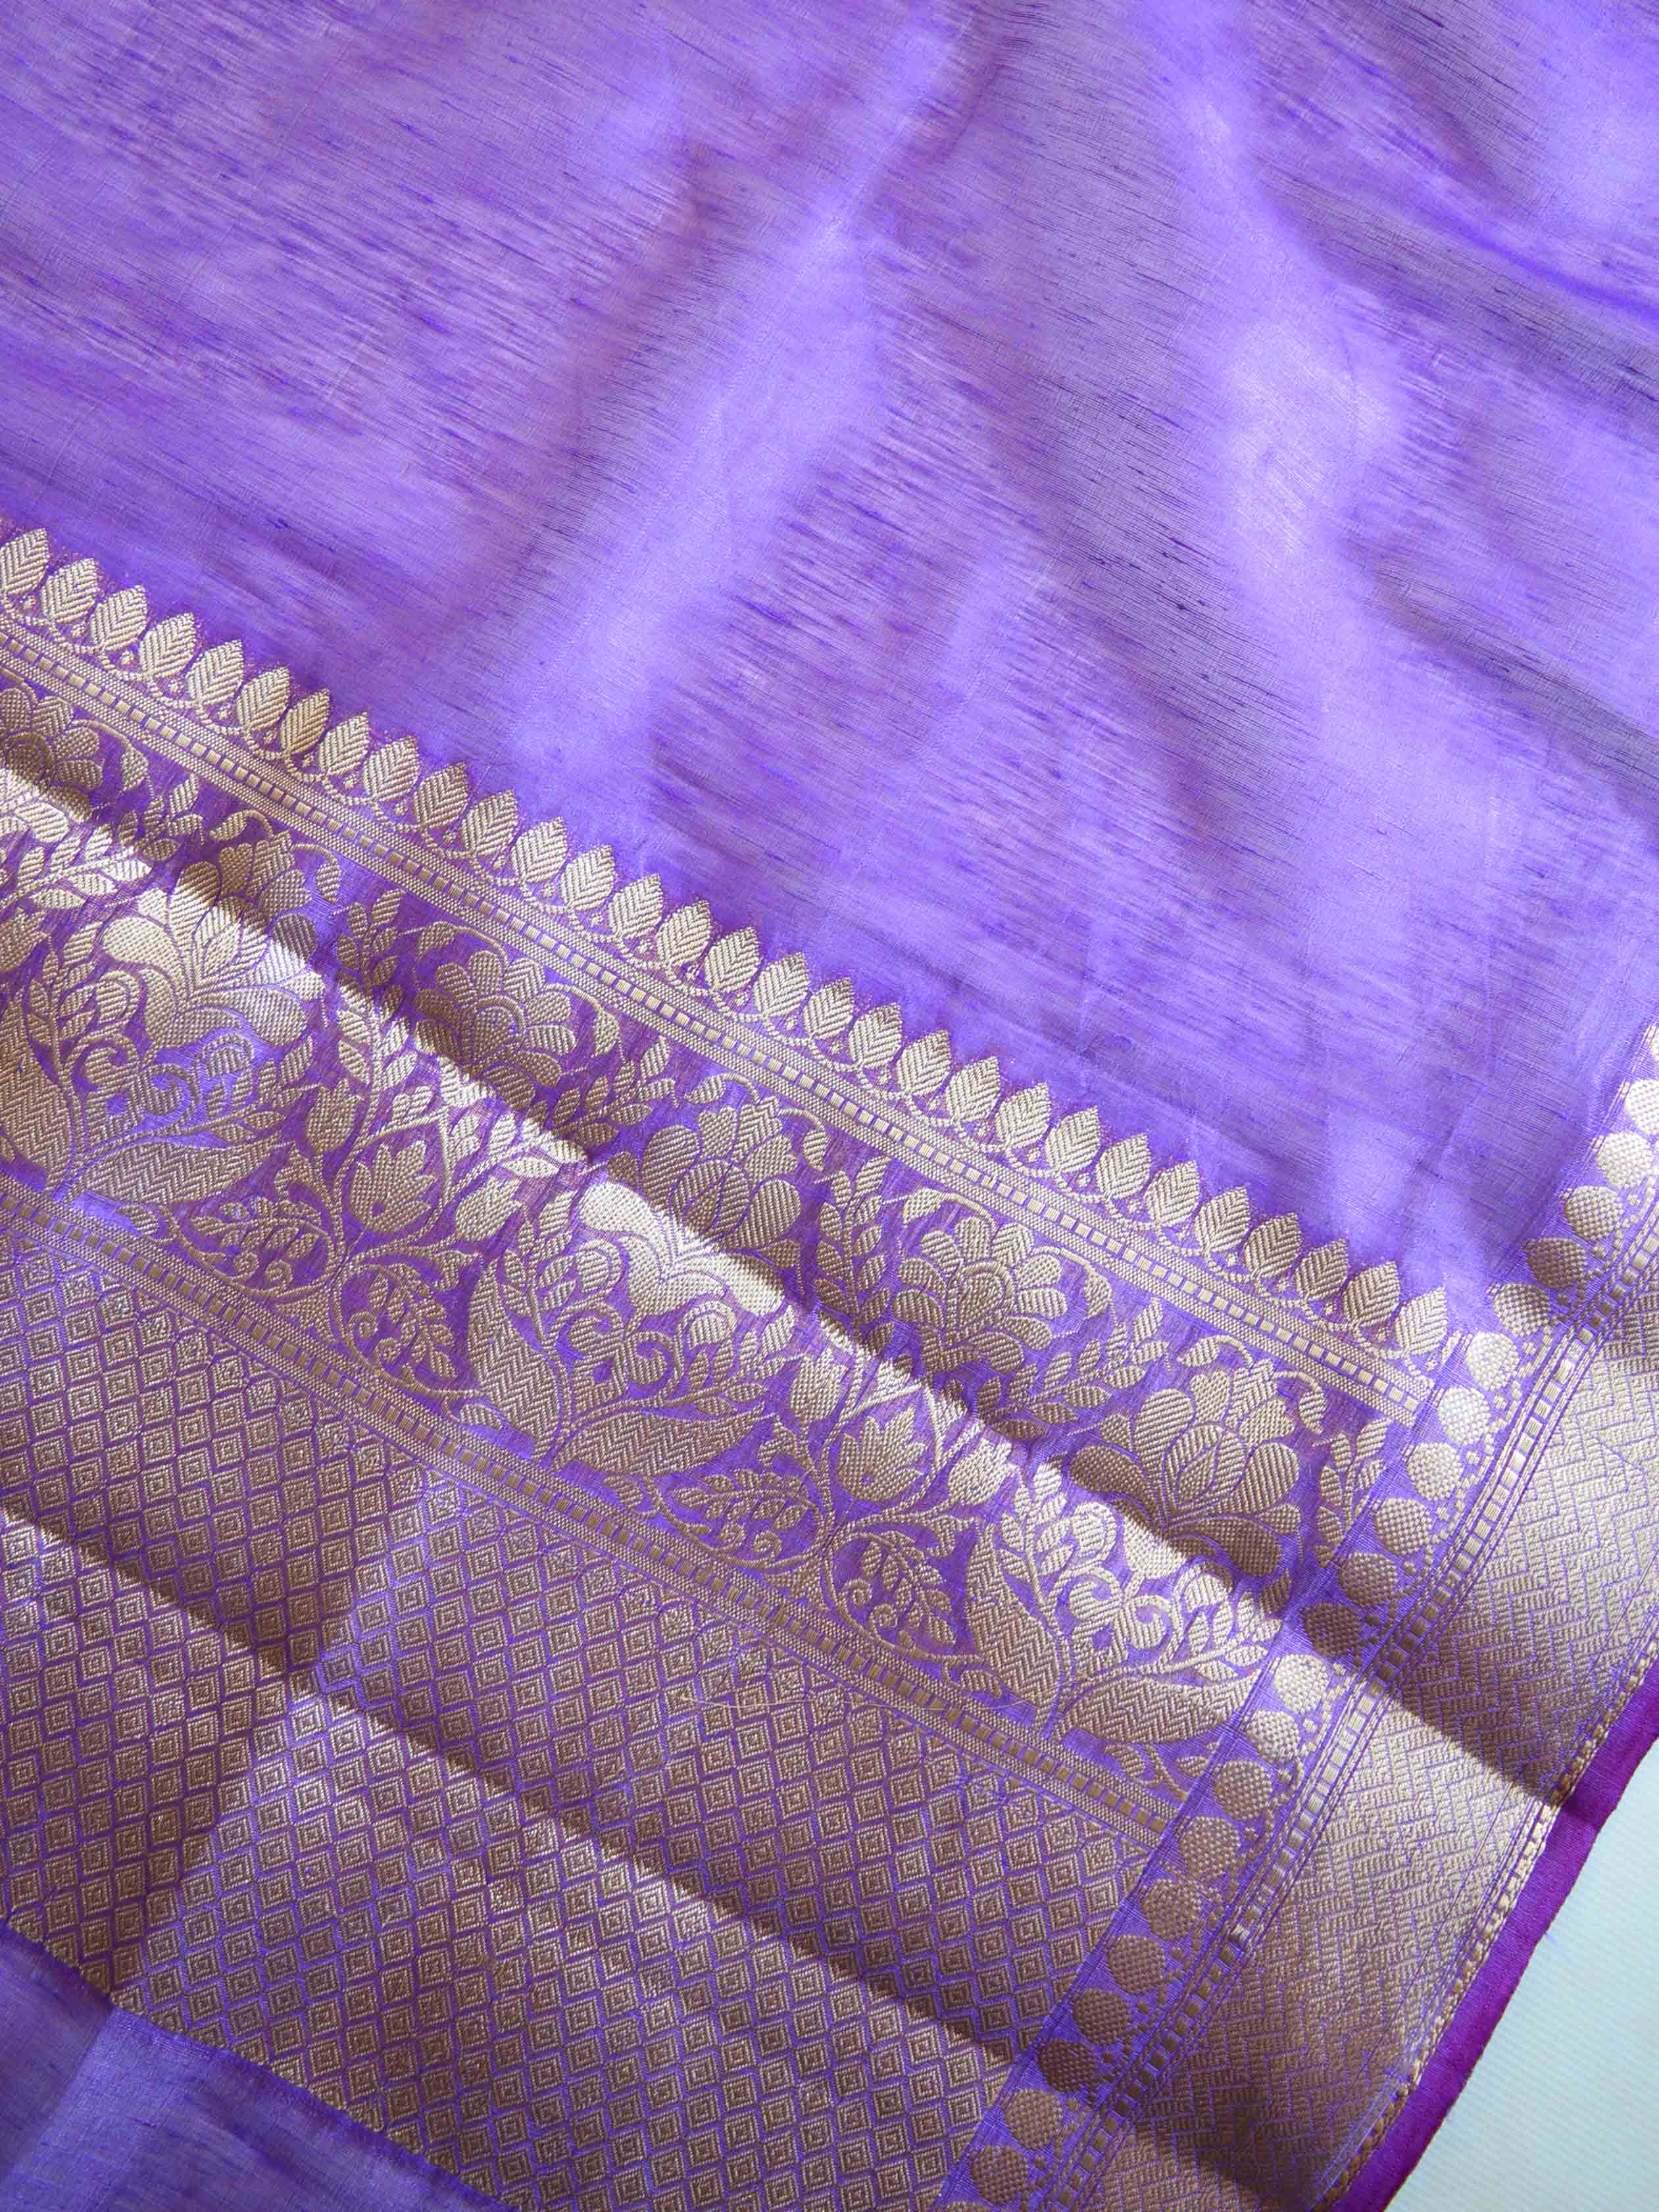 Banarasee Handloom Pure Linen Cotton Gold Zari Saree-Violet